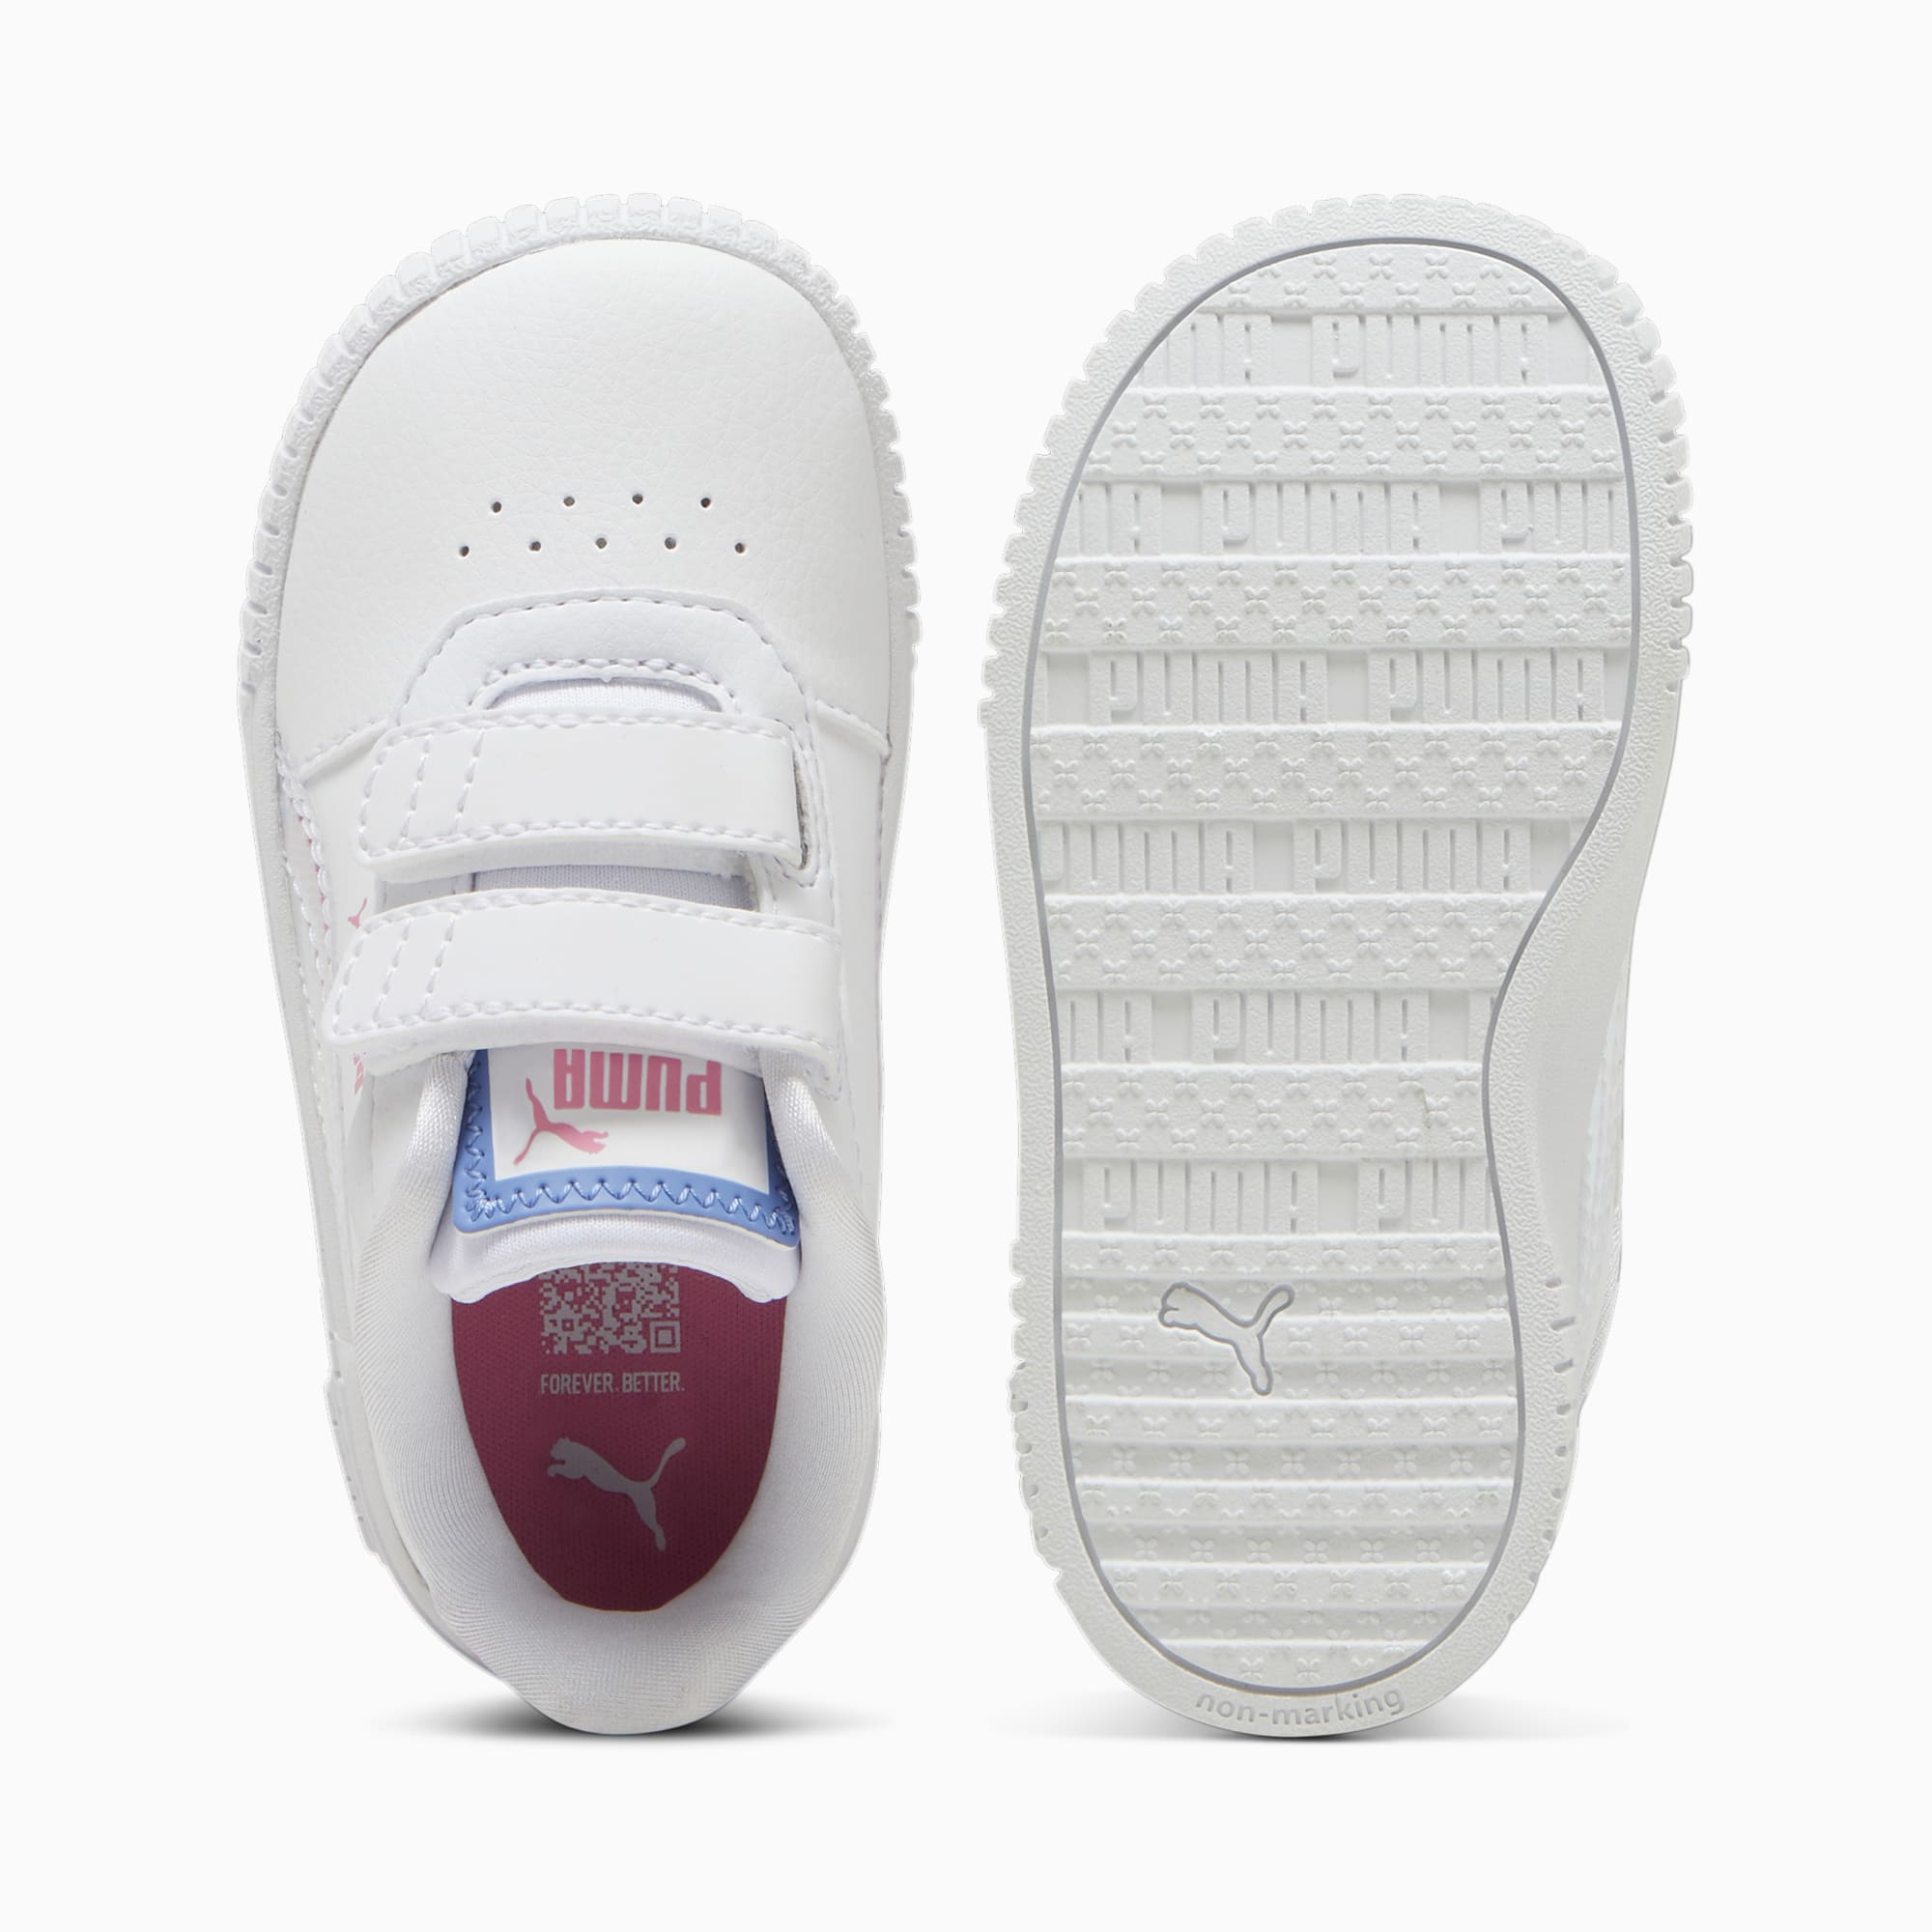 Scarpe Sneakers Carina 2.0 Deep Dive, Bianco/Blu/Rosa/Altro